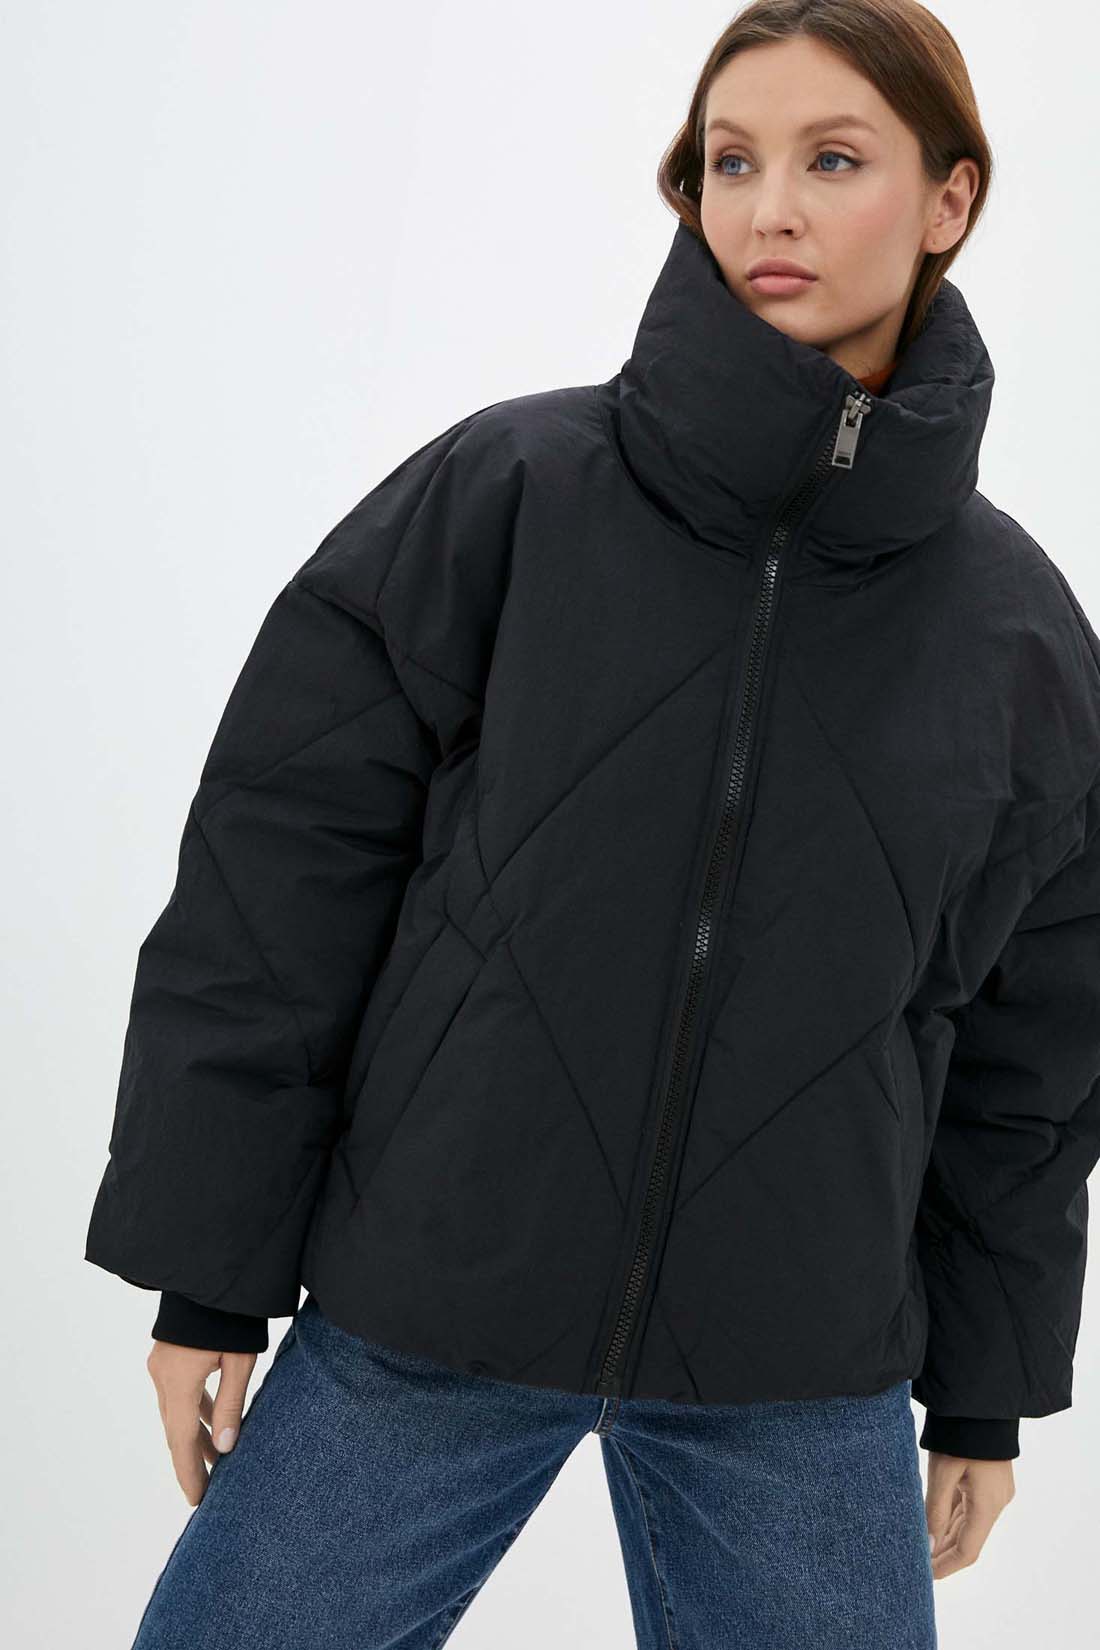 Куртка (Эко пух) (арт. baon B041518), размер S, цвет черный Куртка (Эко пух) (арт. baon B041518) - фото 1